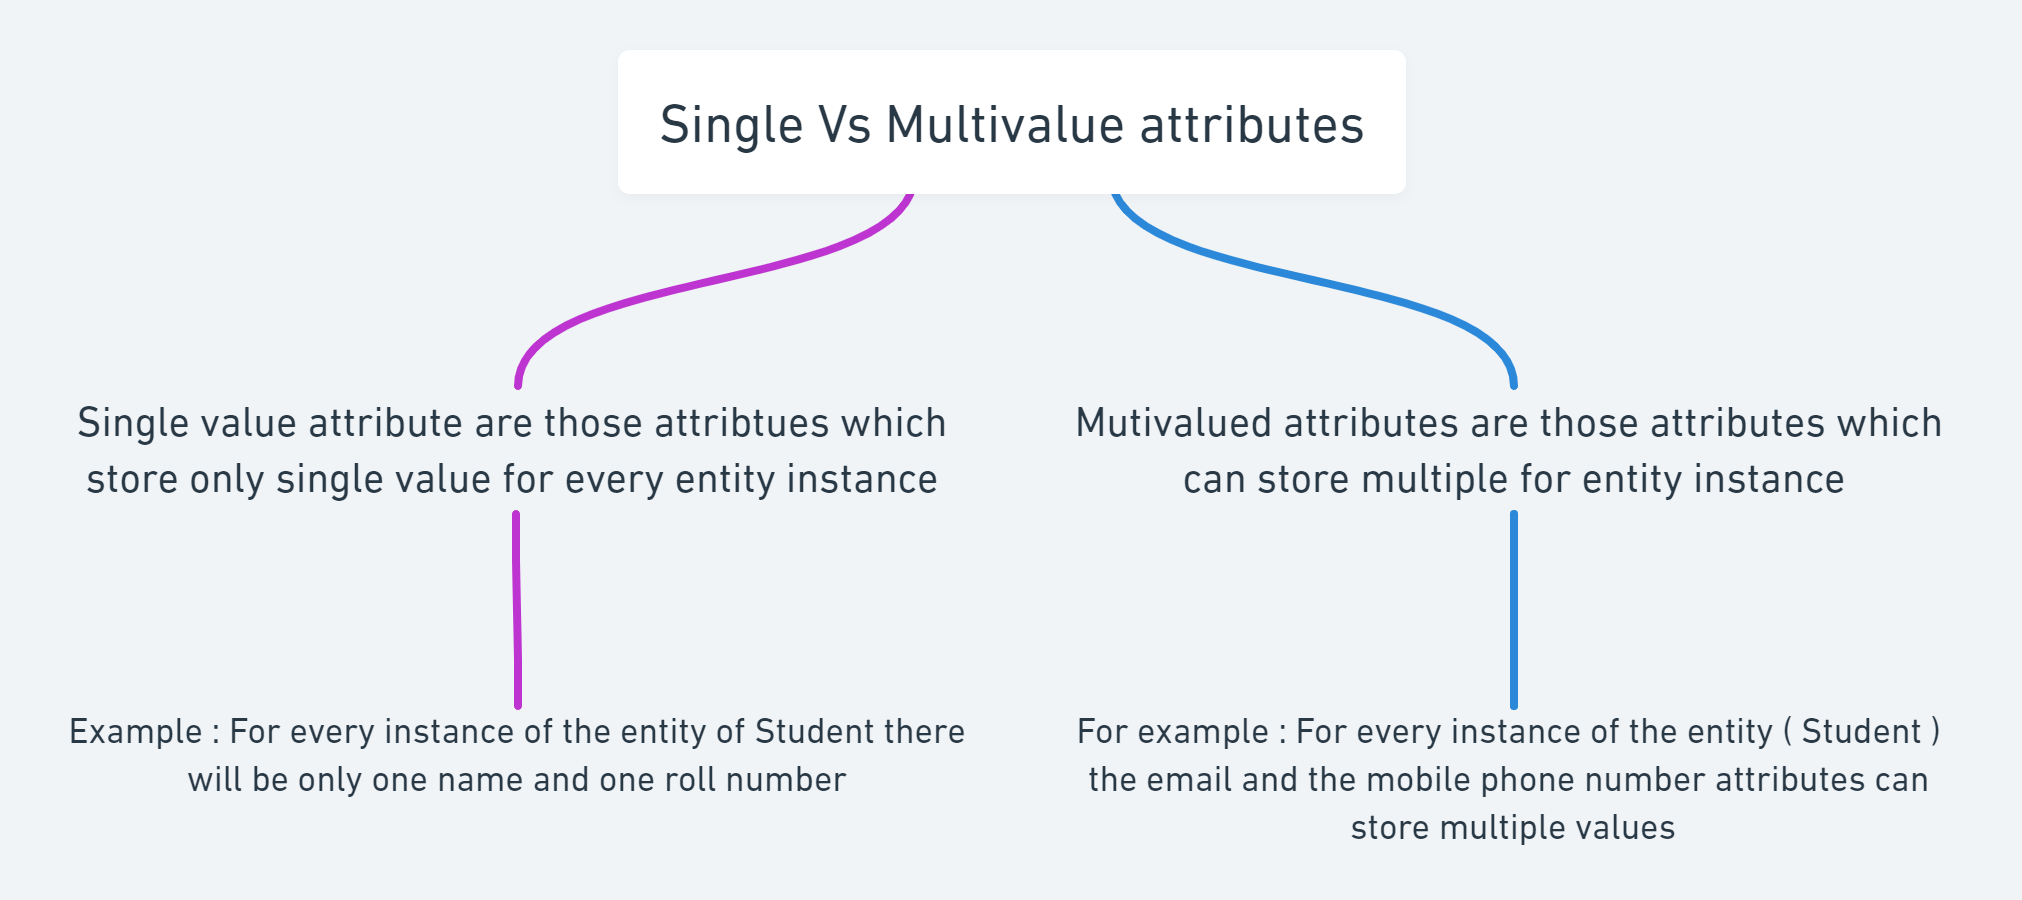 Single Vs Multivalue attributes@2x (1).png